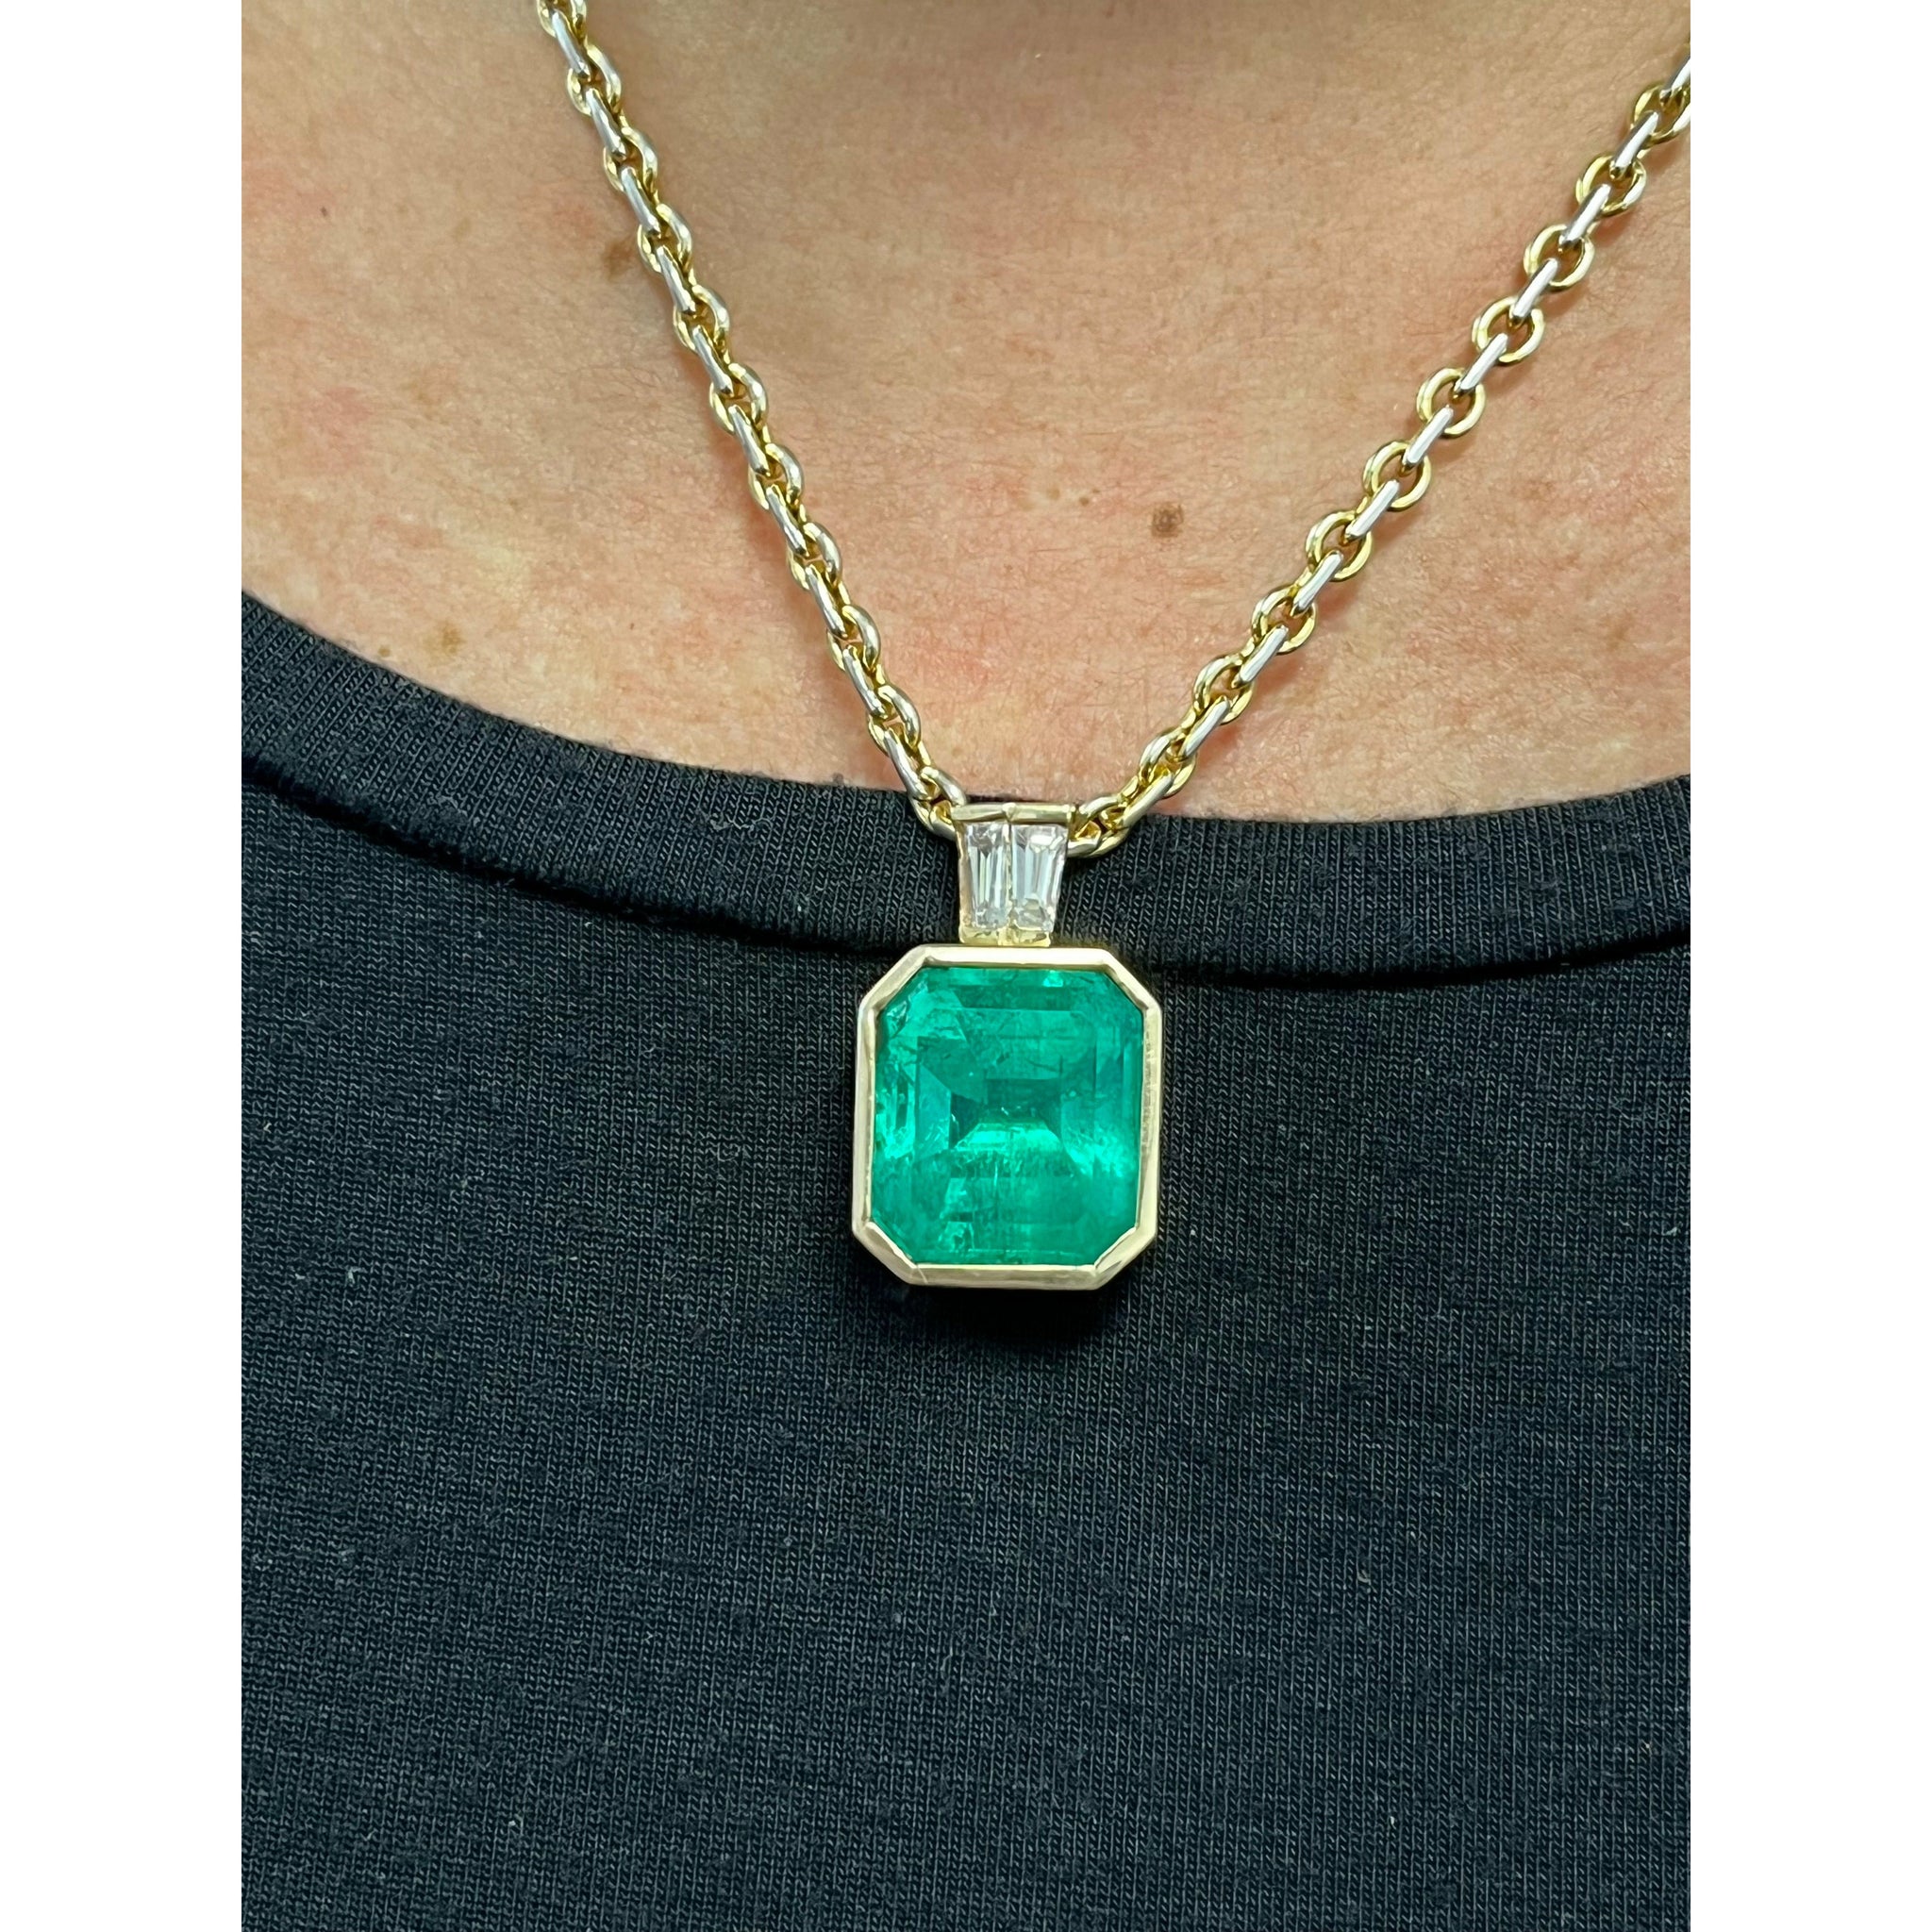 20 Carat Colombian Emerald Pendant in 14k Gold Bezel Setting - ASSAY